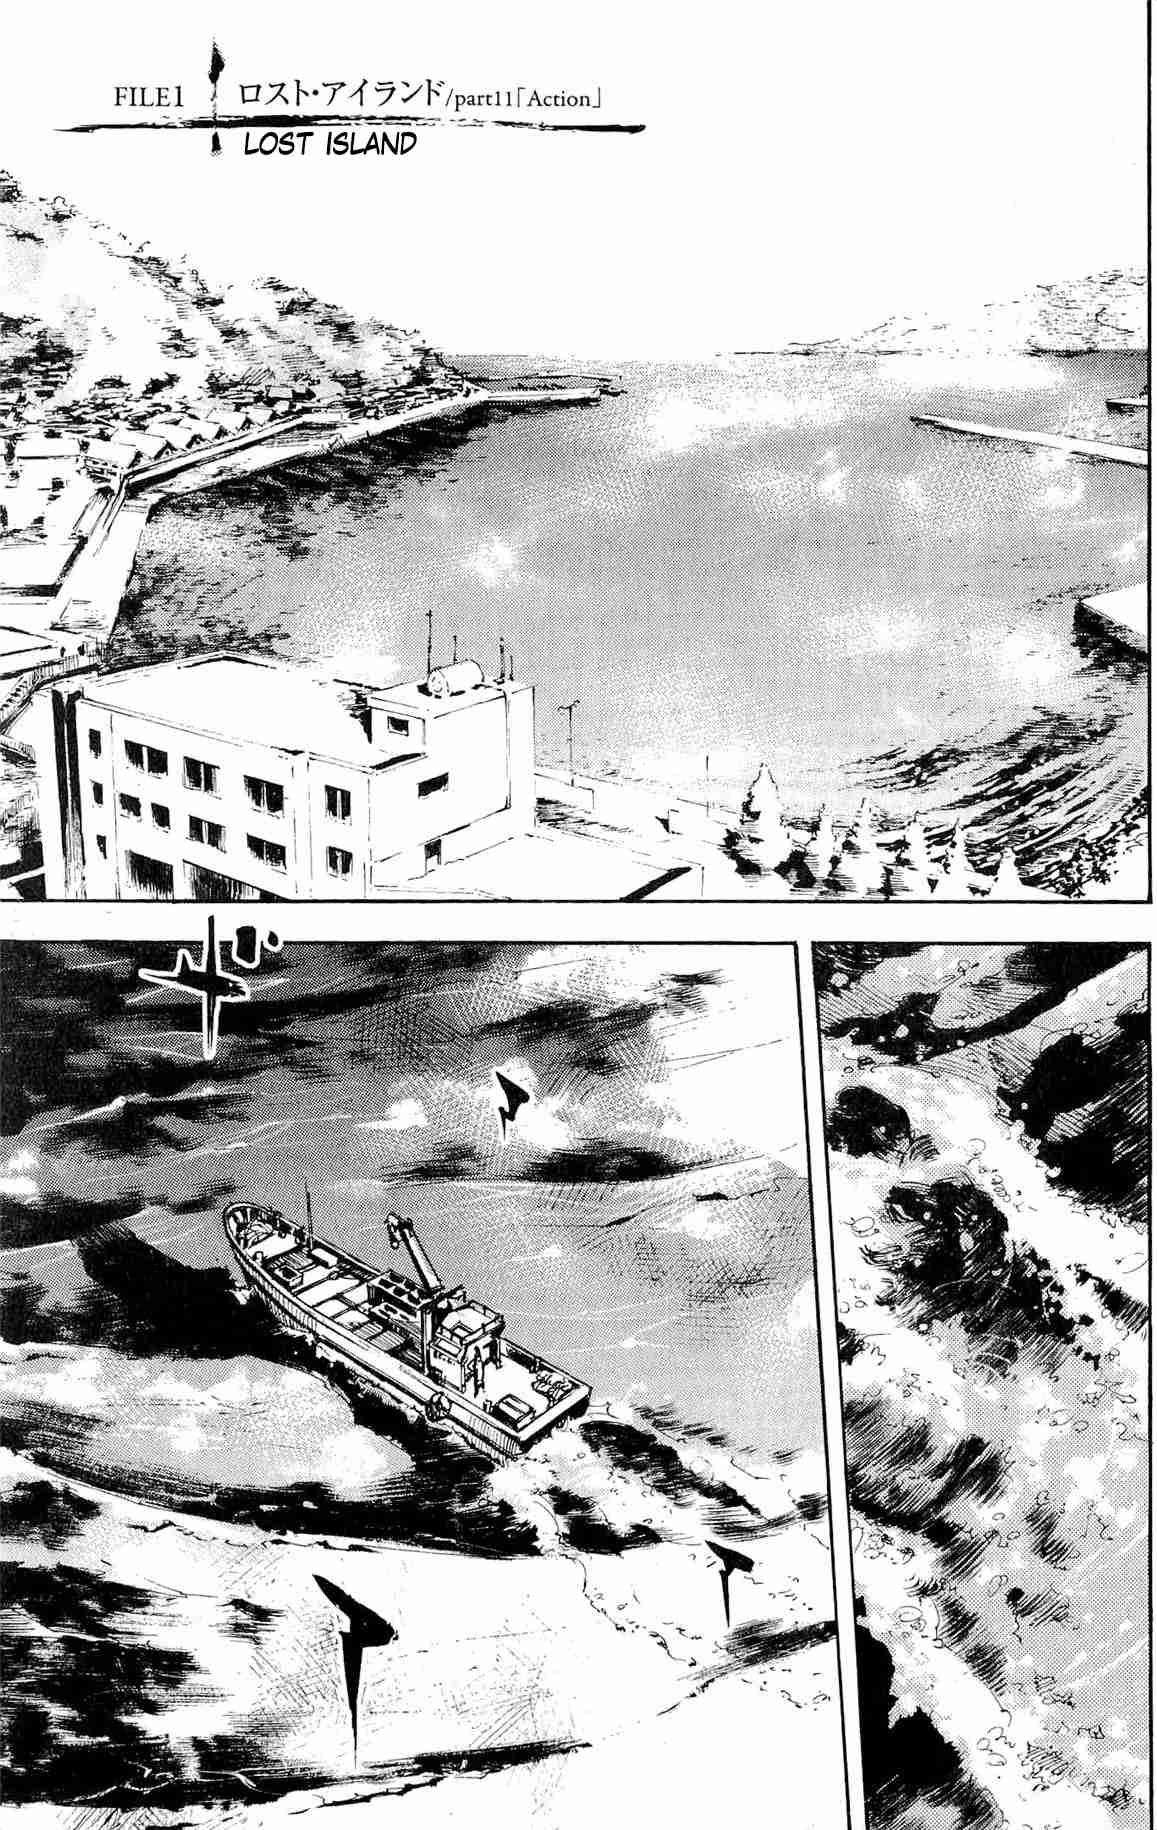 Jiraishin Diablo Vol. 2 Ch. 11 The Lost Island / Part 11 "Action"